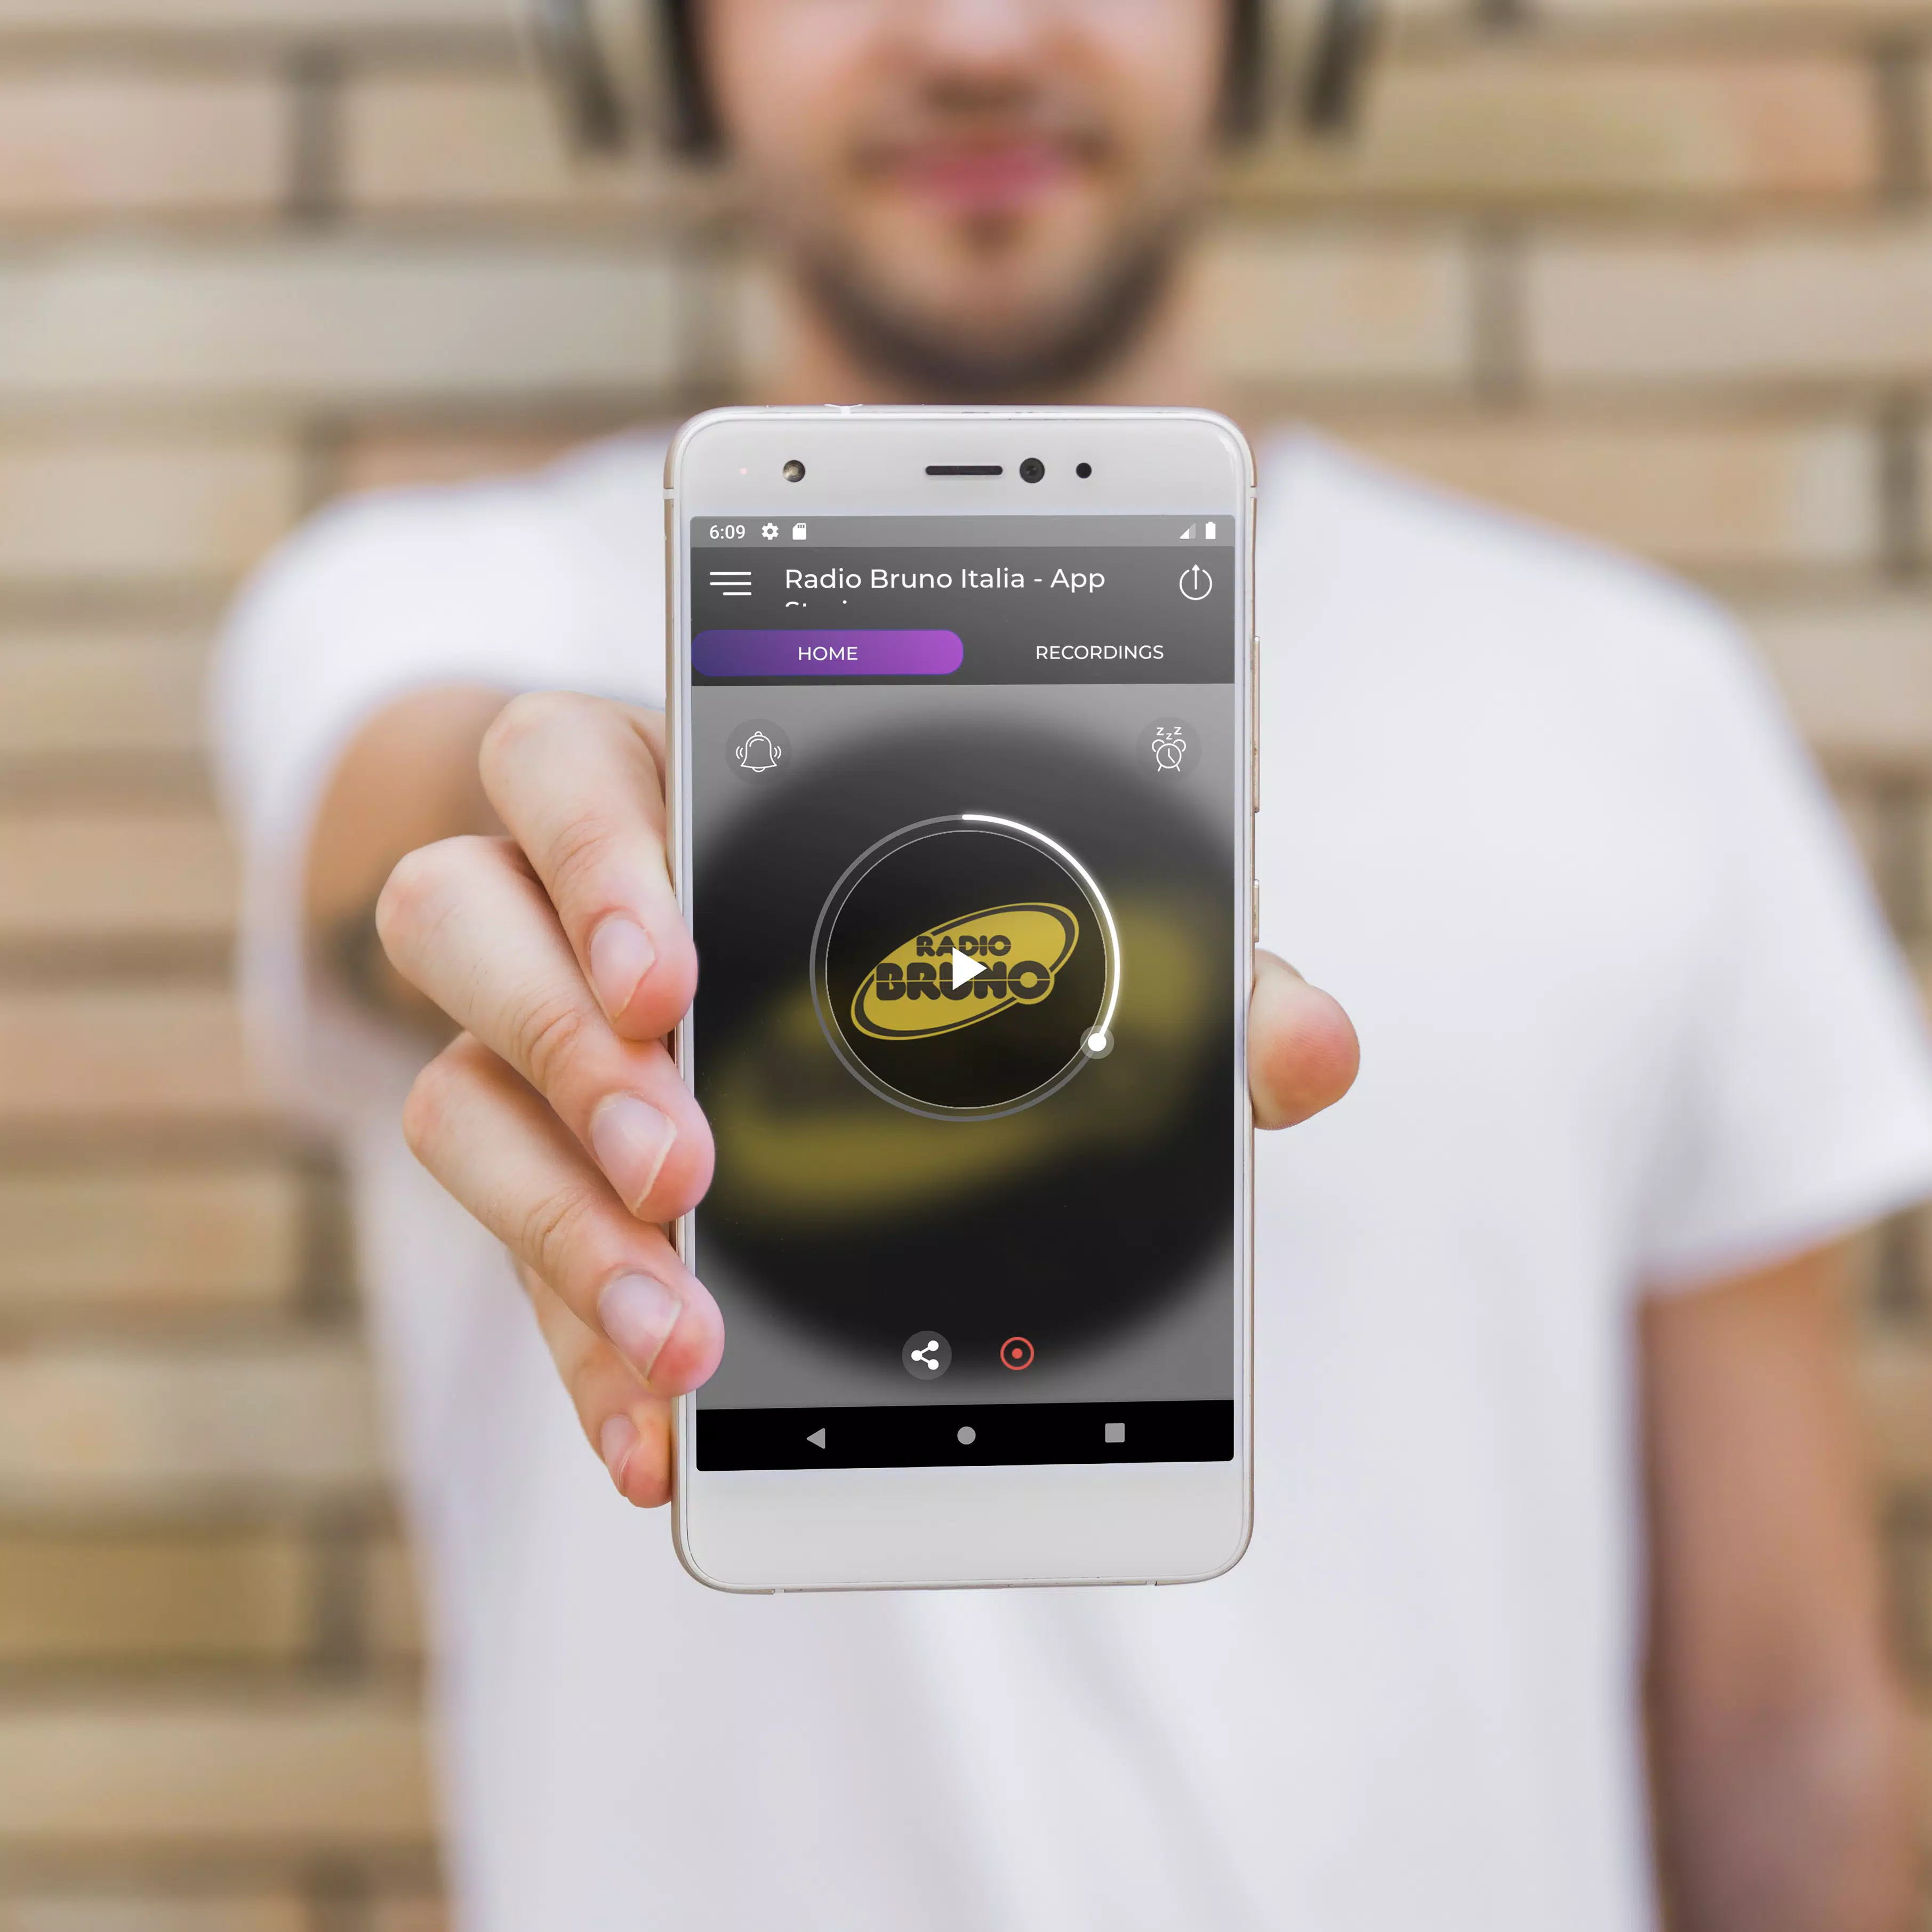 Radio Bruno Italia App Online for Android - APK Download